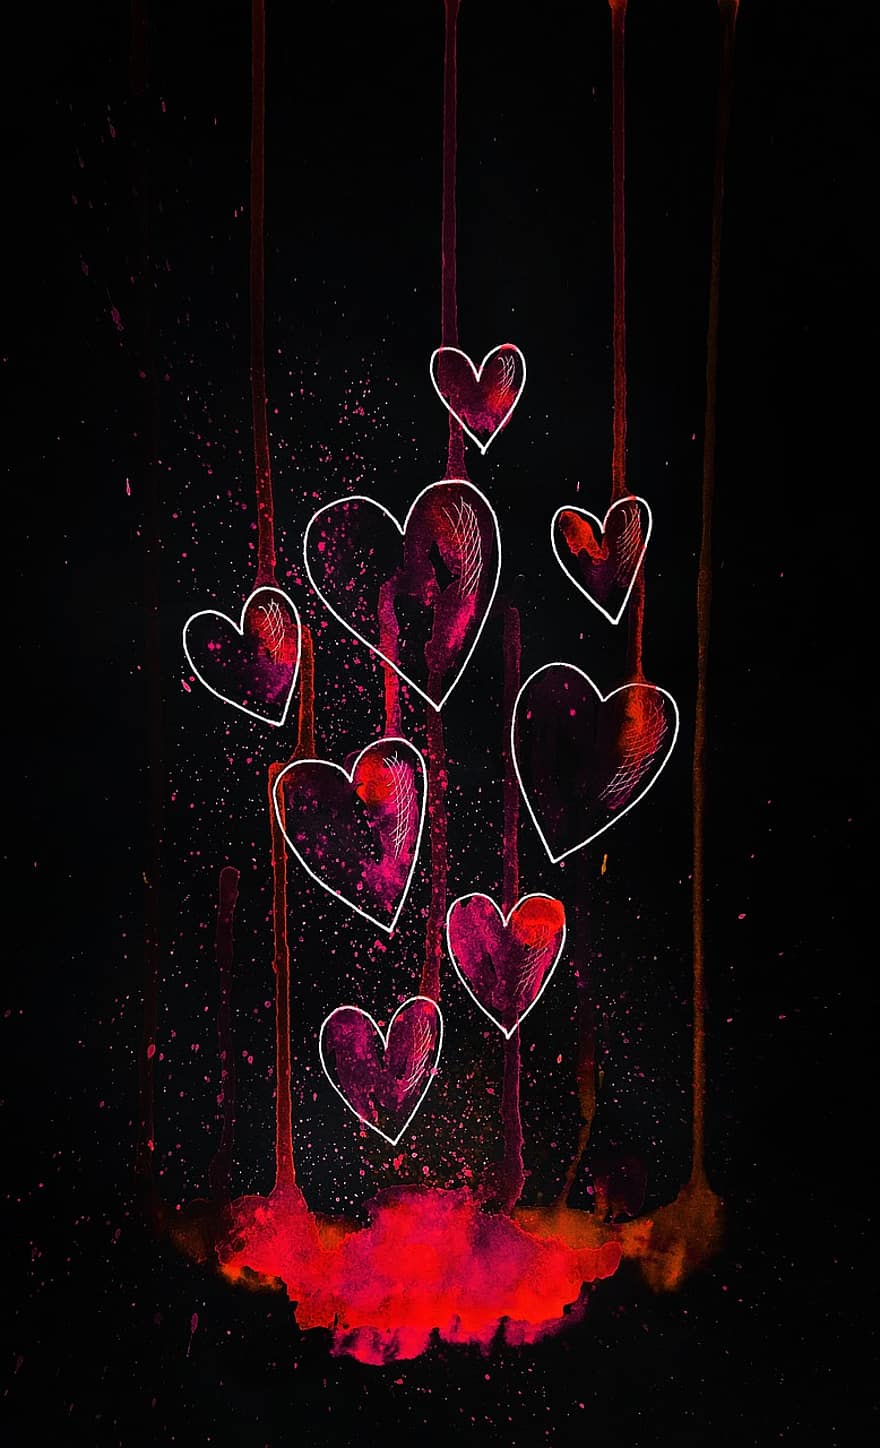 Hearts, Valentine's Day, Art, Sketch, Form, Symbol, Sample, Design, Love, A Heart, Feelings